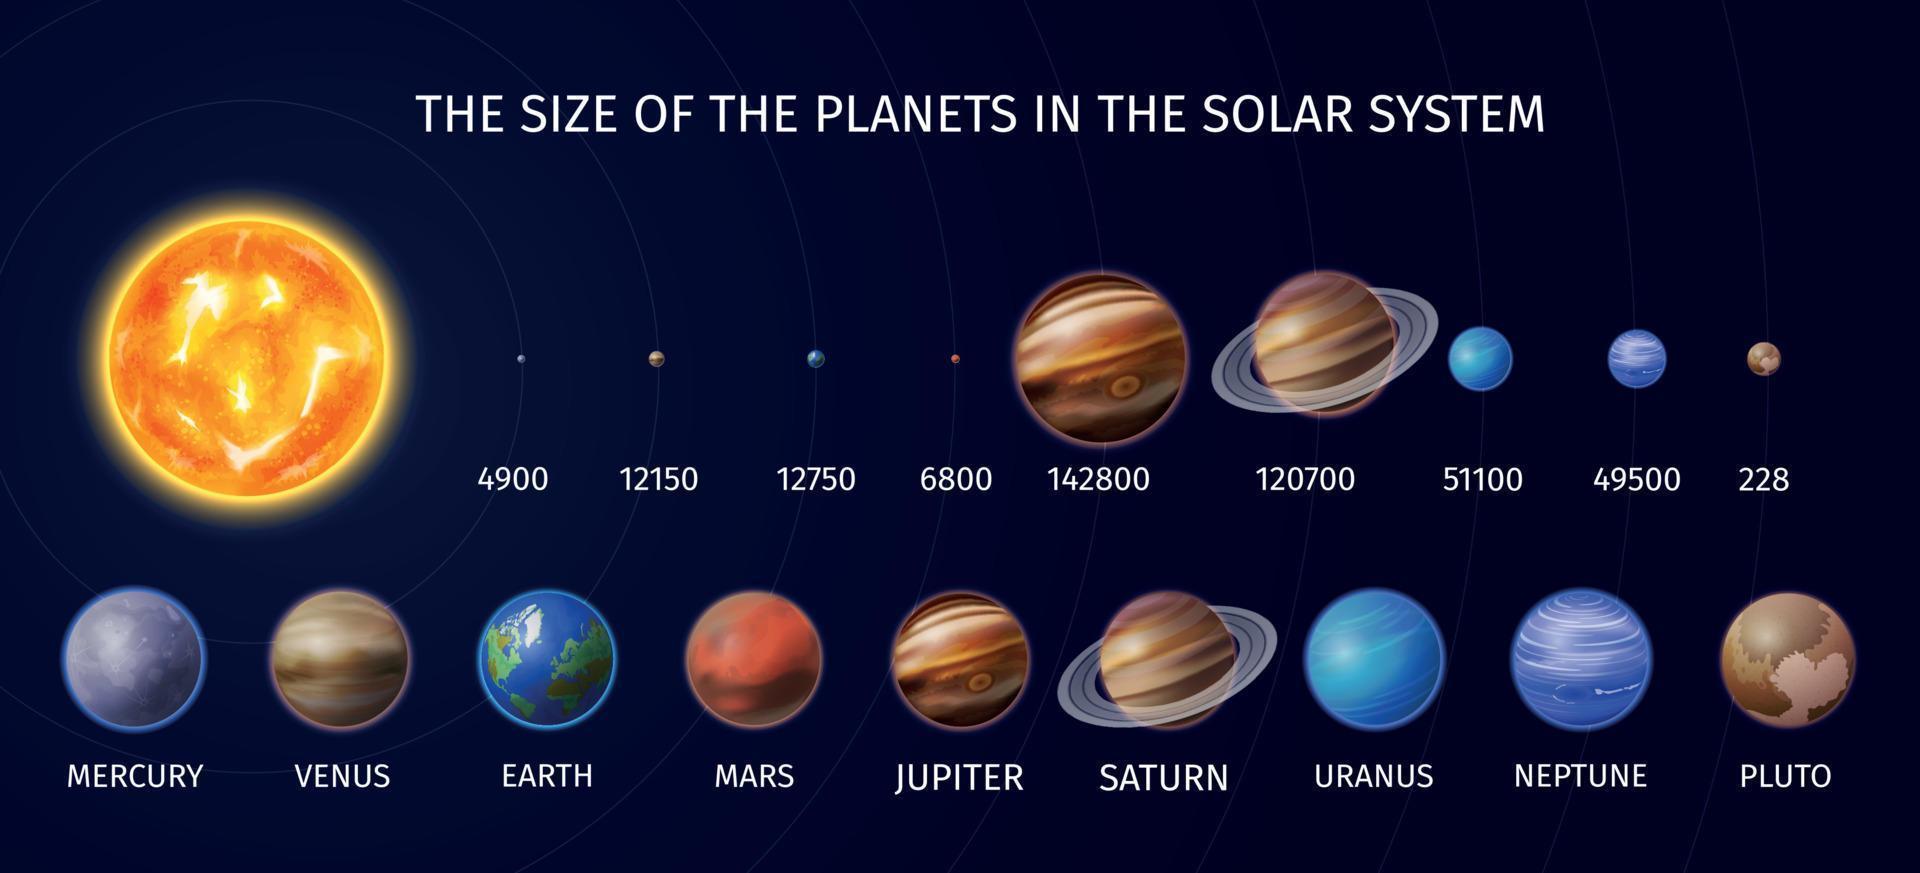 realistische Infografik zum Planeten des Sonnensystems vektor